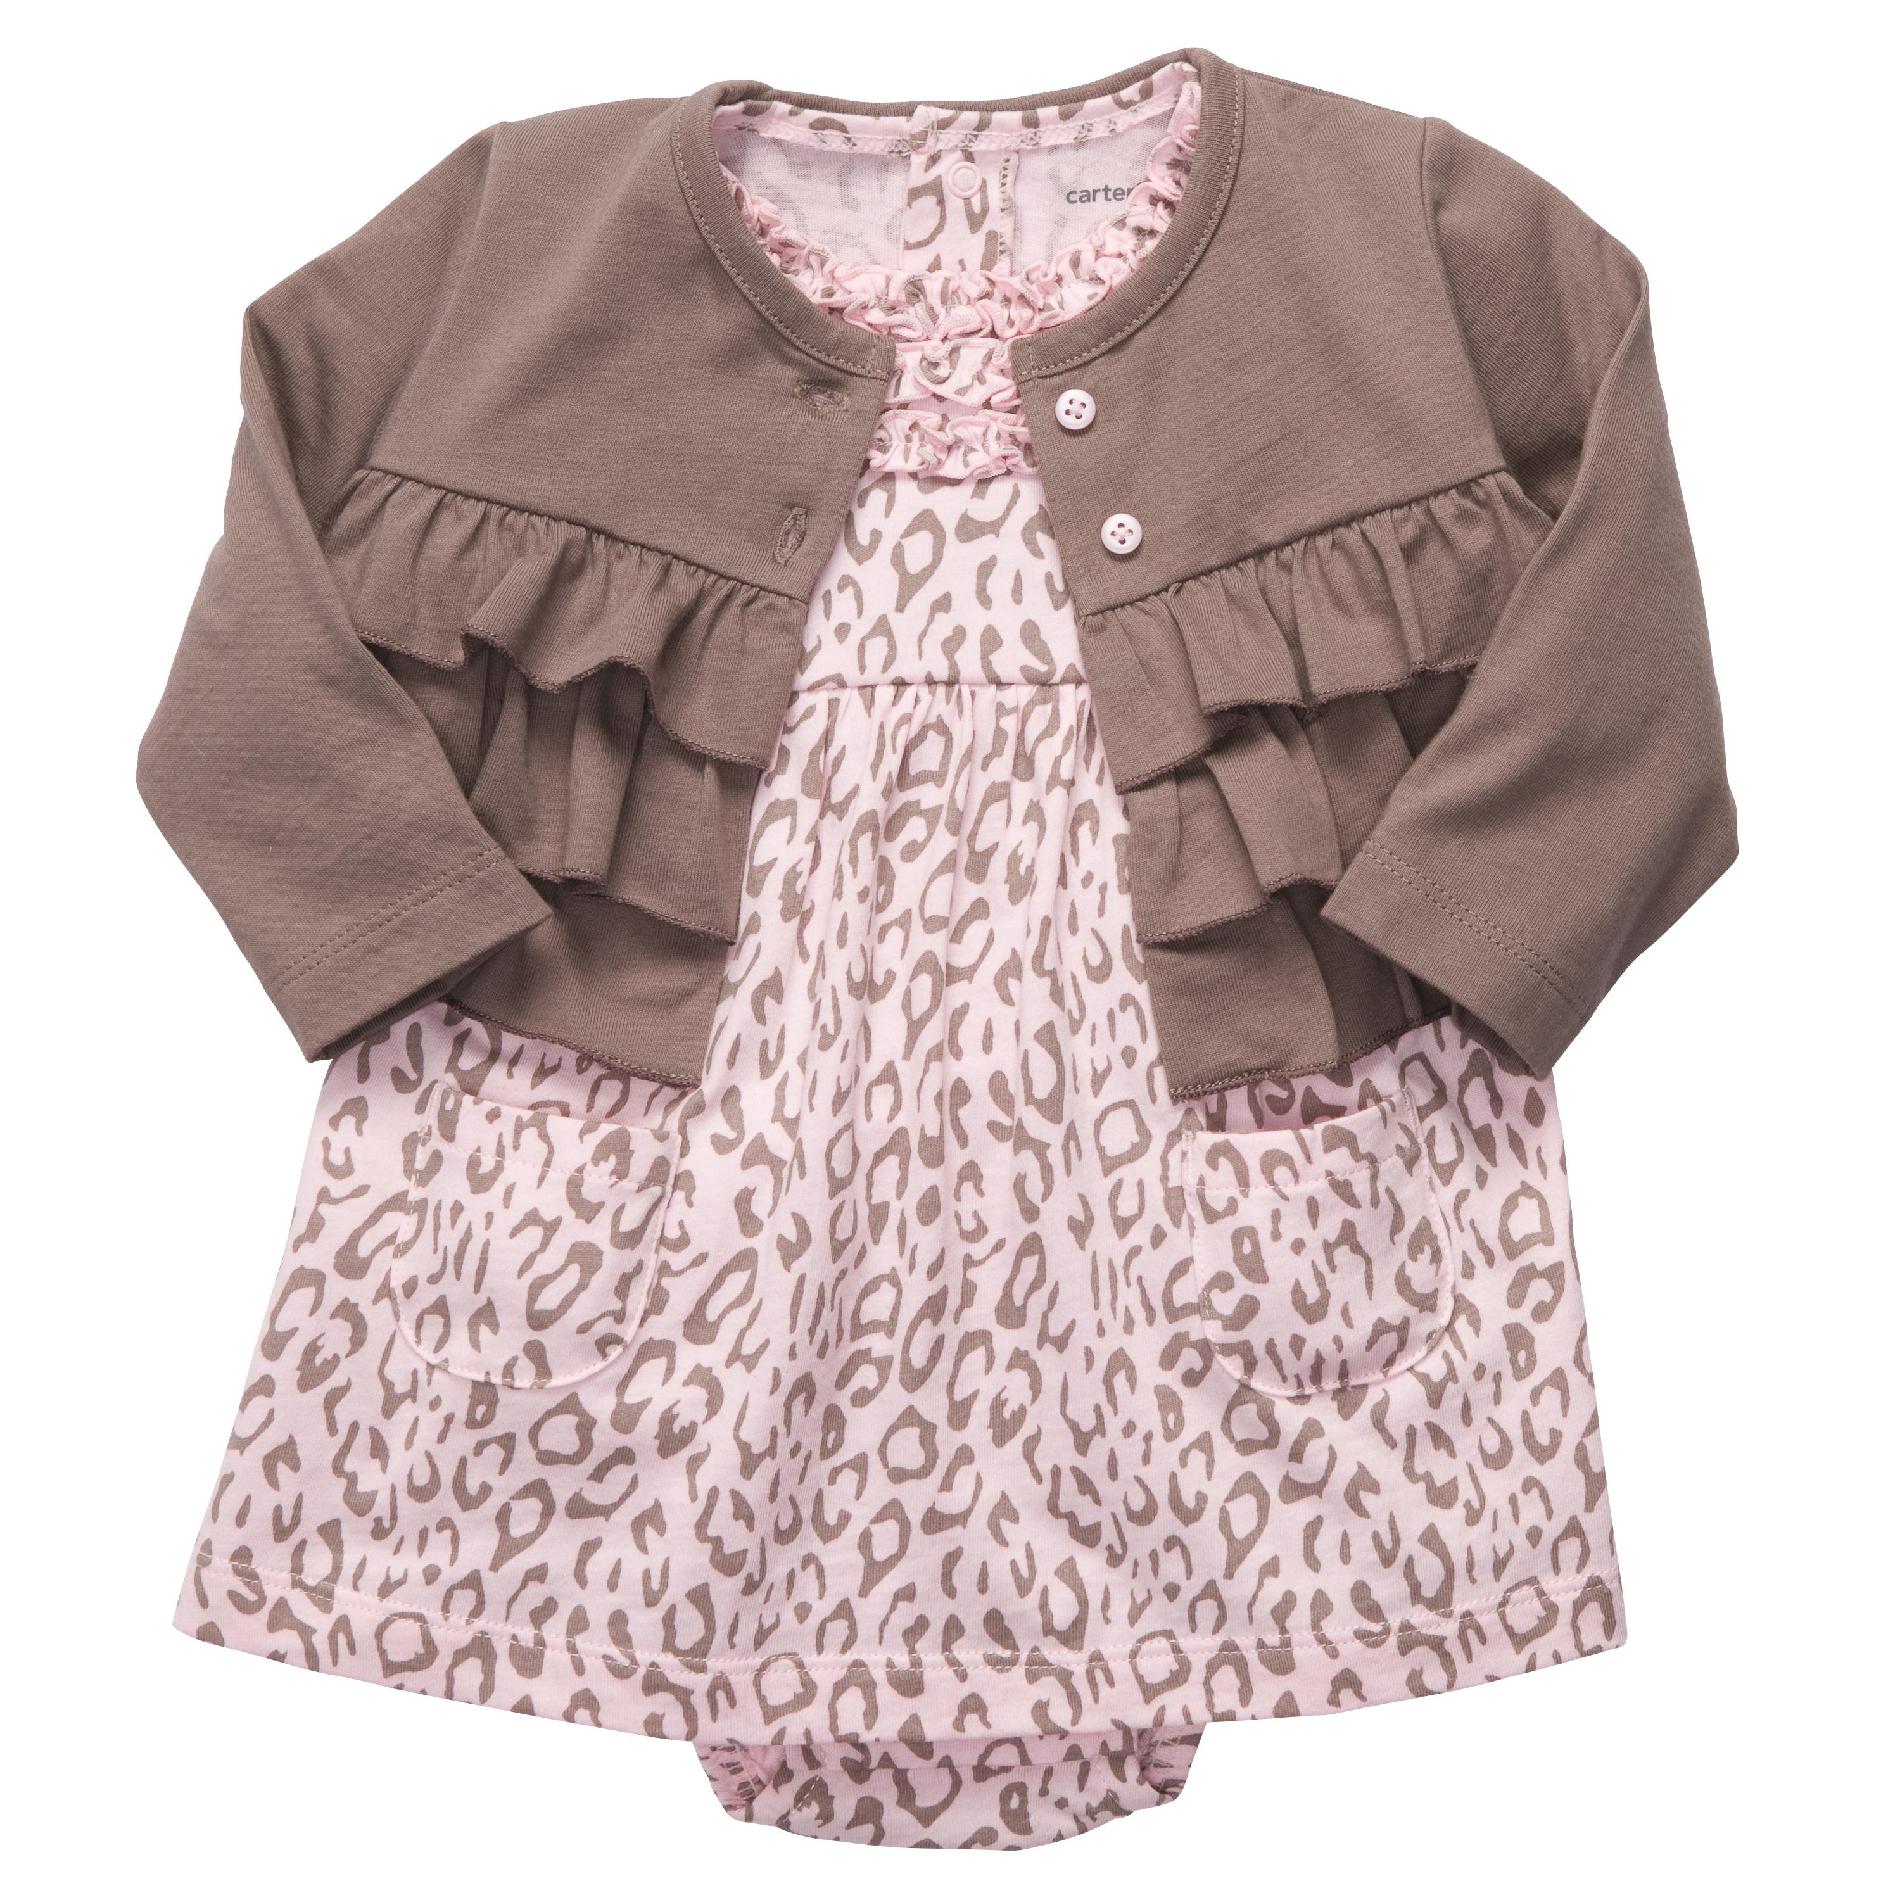 Carter's Newborn & Infant Girl's Dress & Sweater - Leopard Print